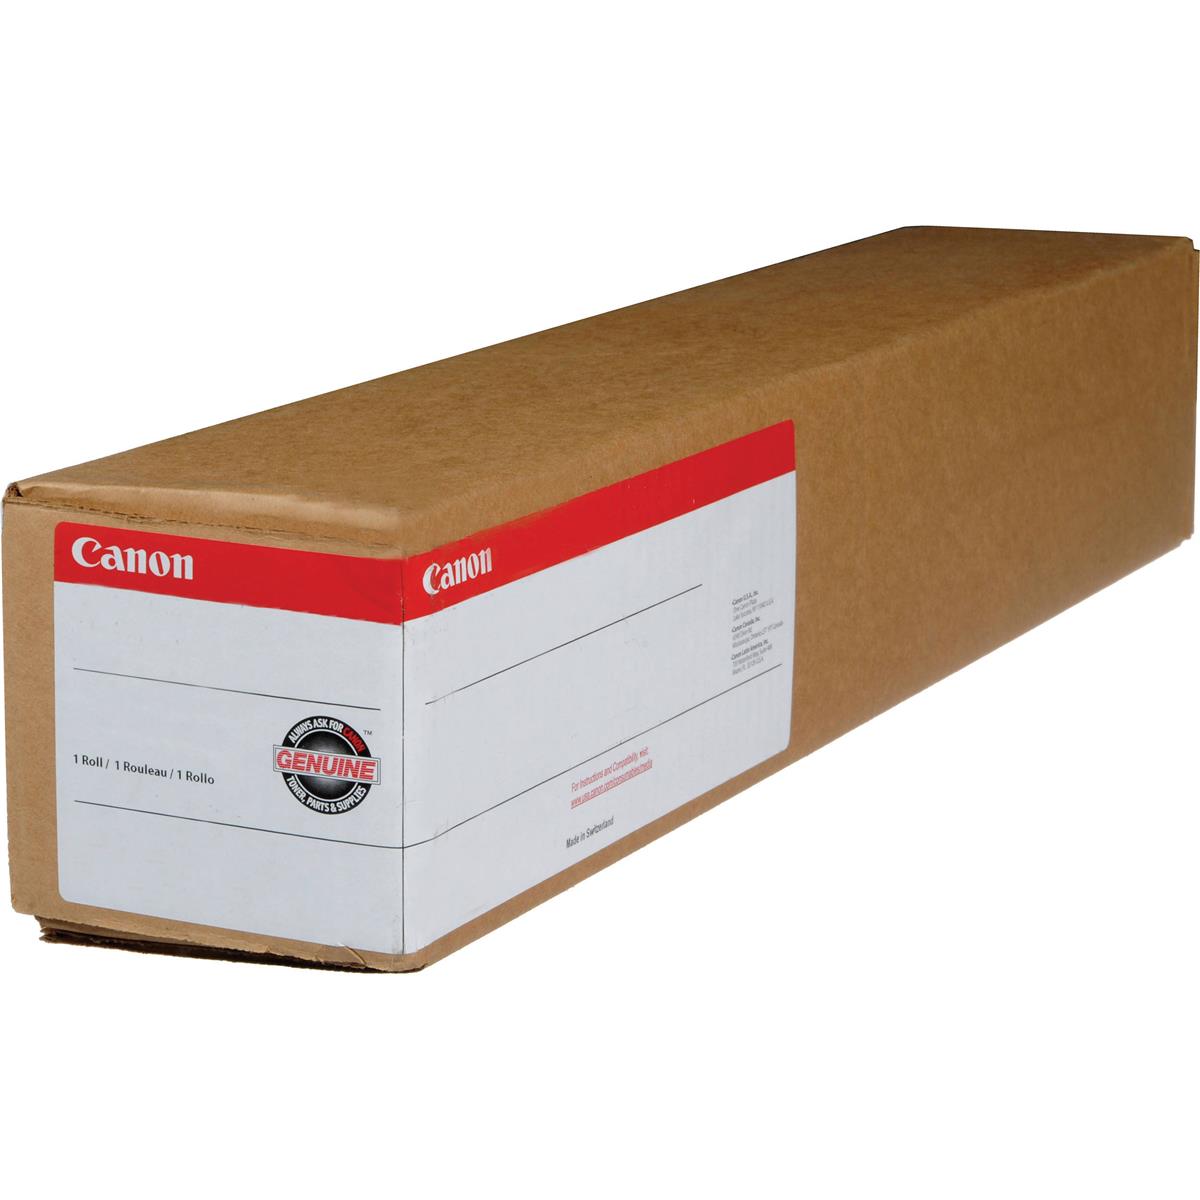 Image of Canon Premium Bond Luster Inkjet Paper